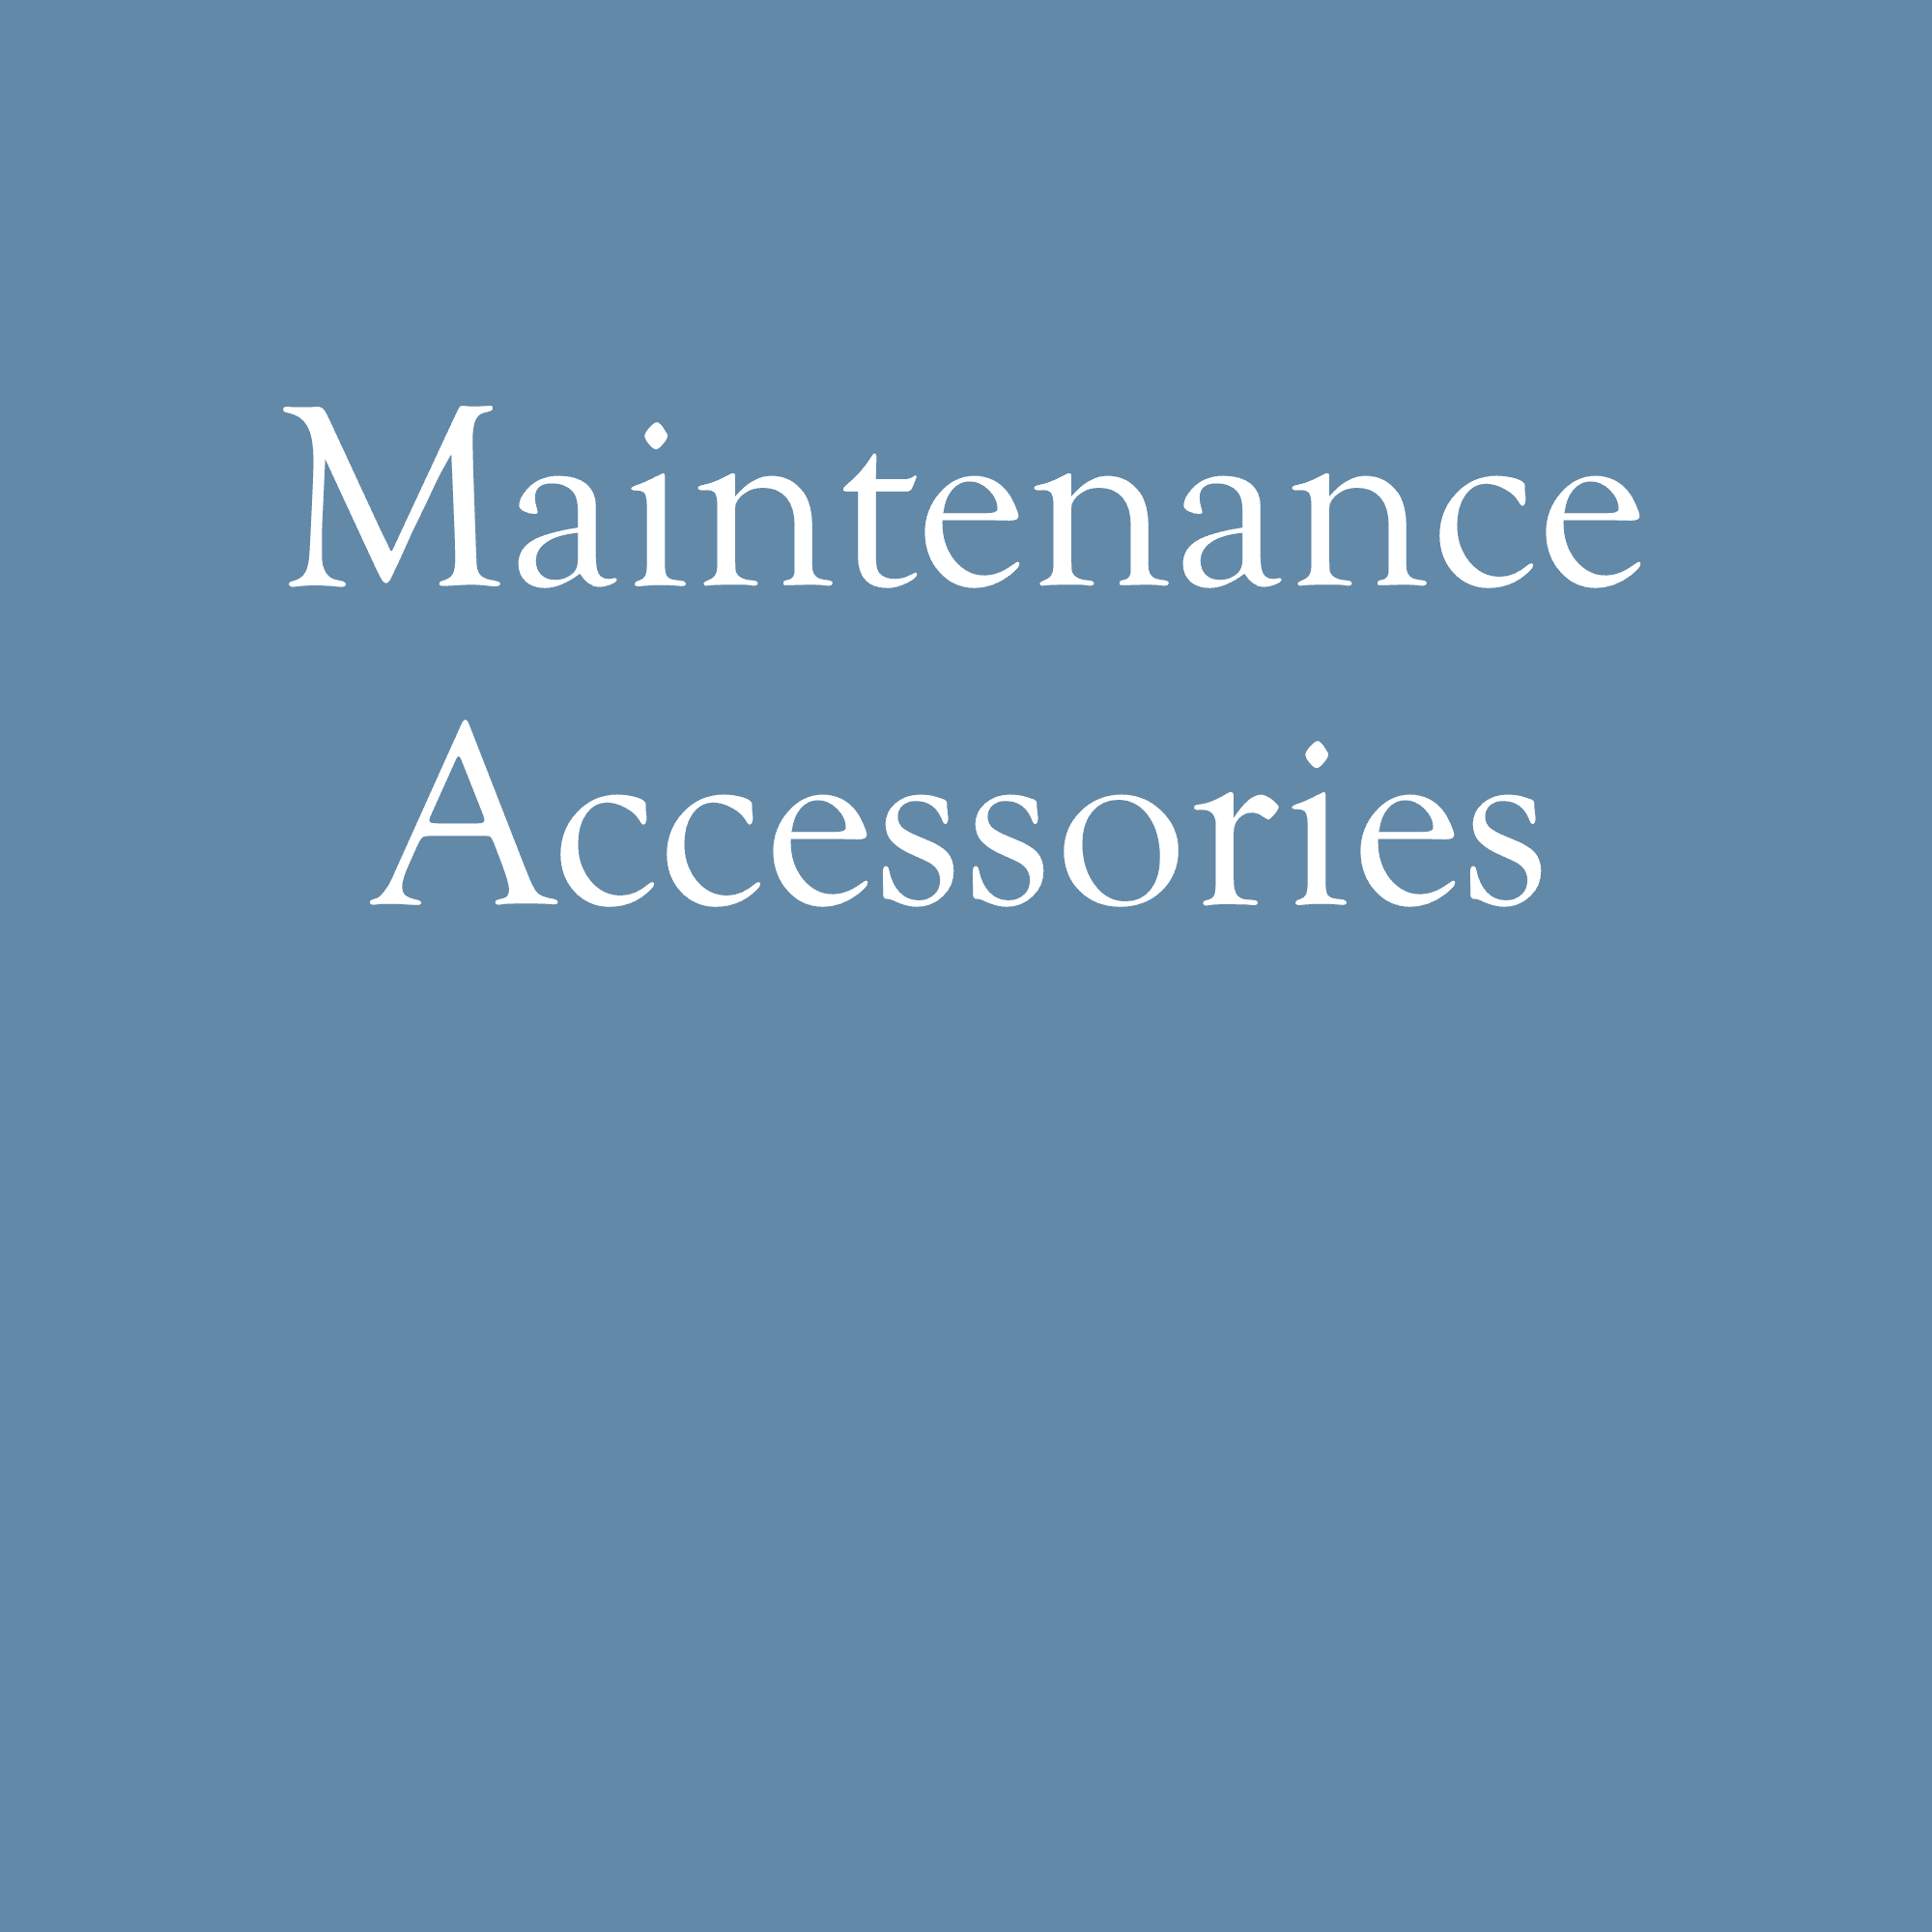 Maintenance Accessories